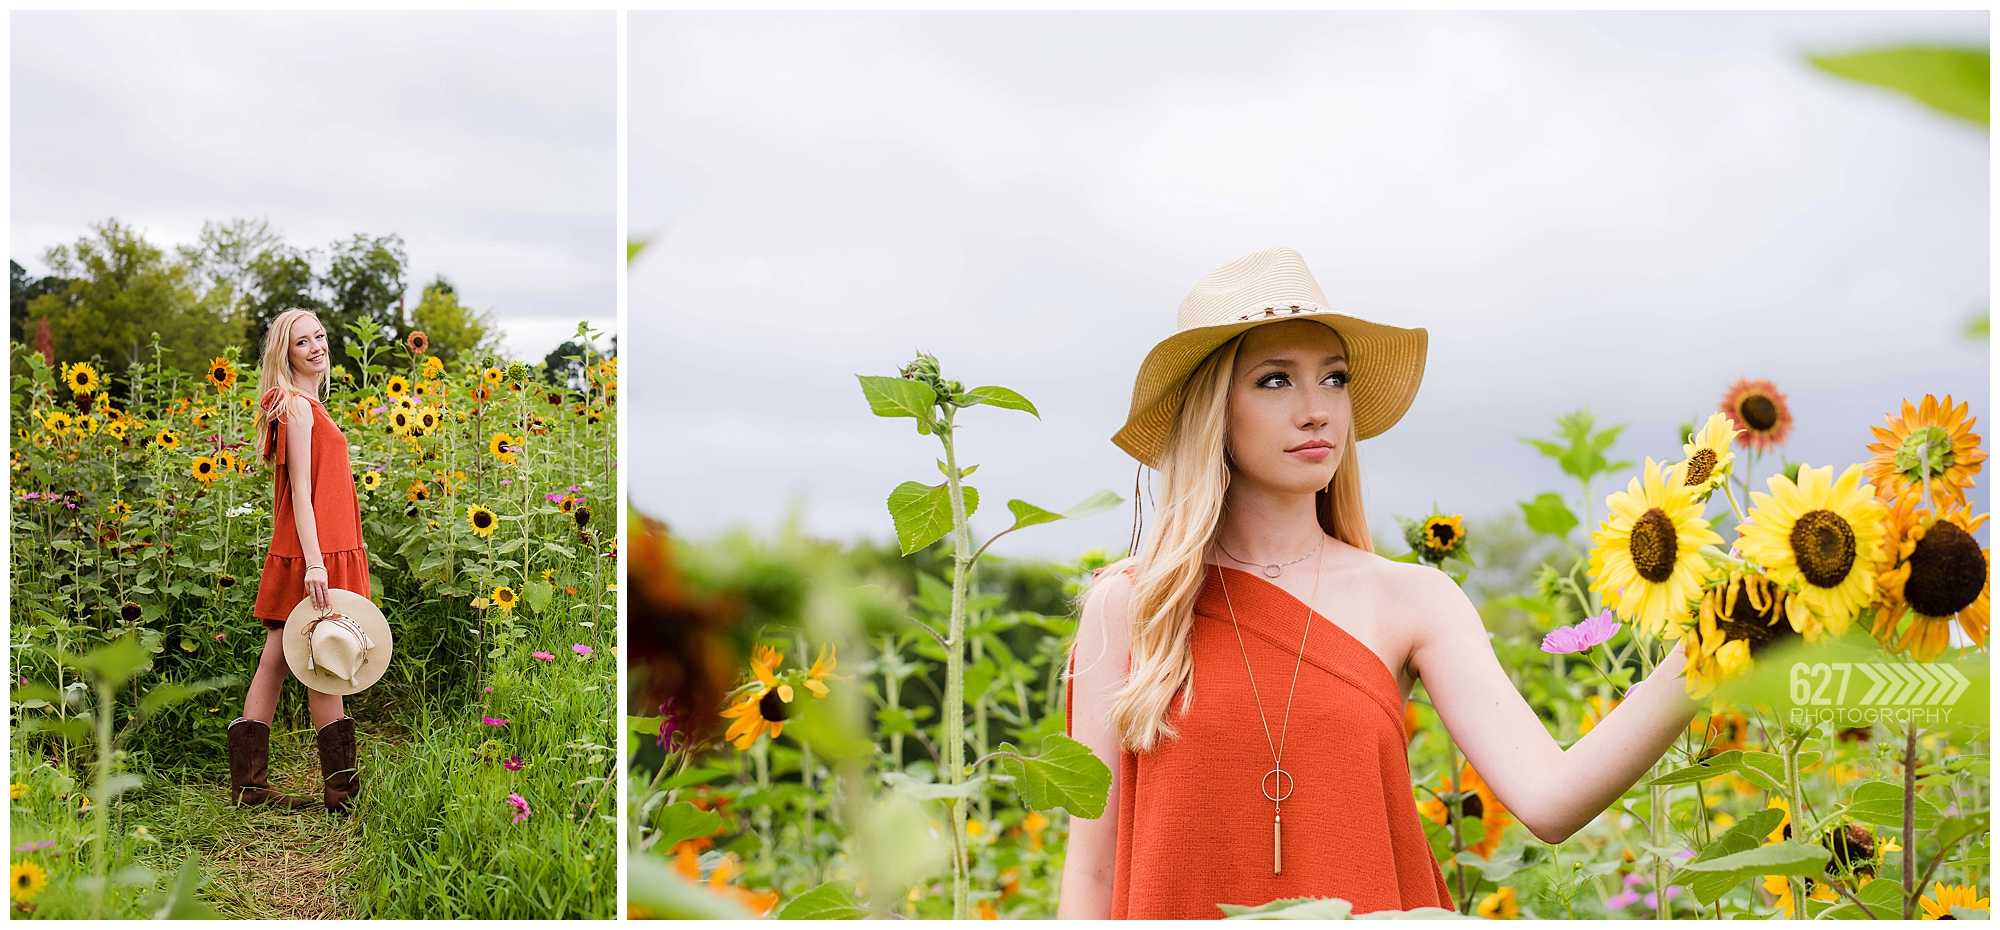 senior girl in sunflower field with straw hat